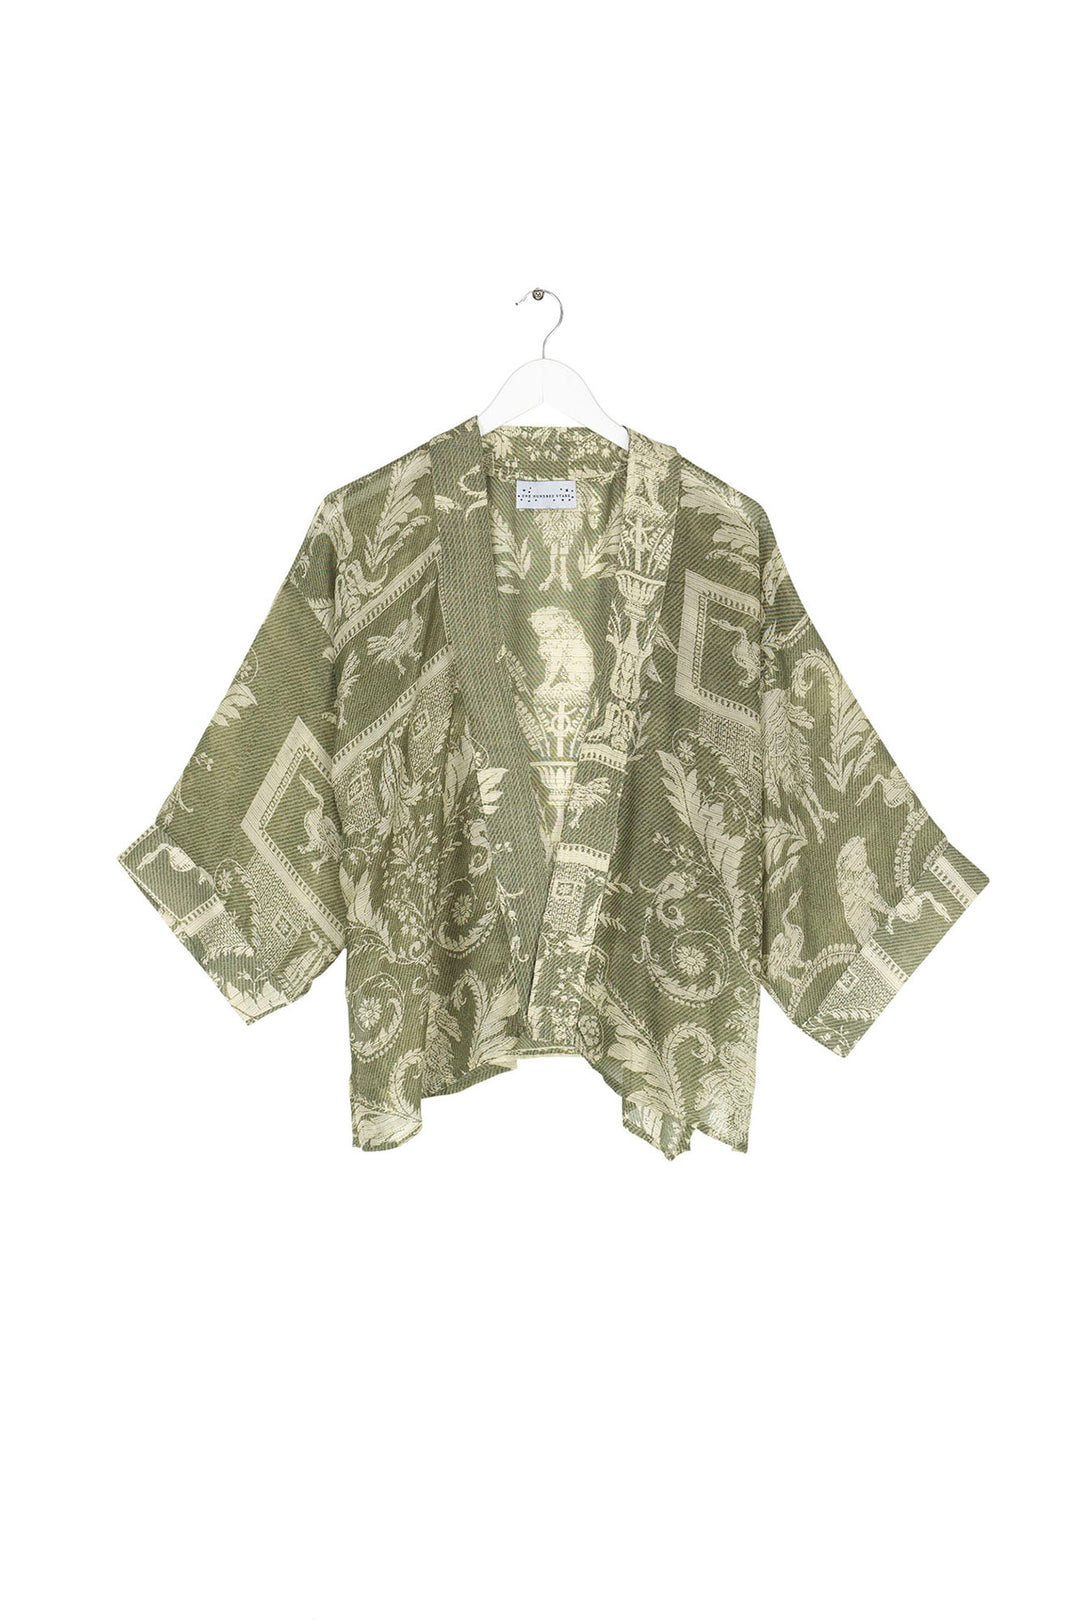 ladies mini short kimono in sage green vintage damask print by One Hundred Stars